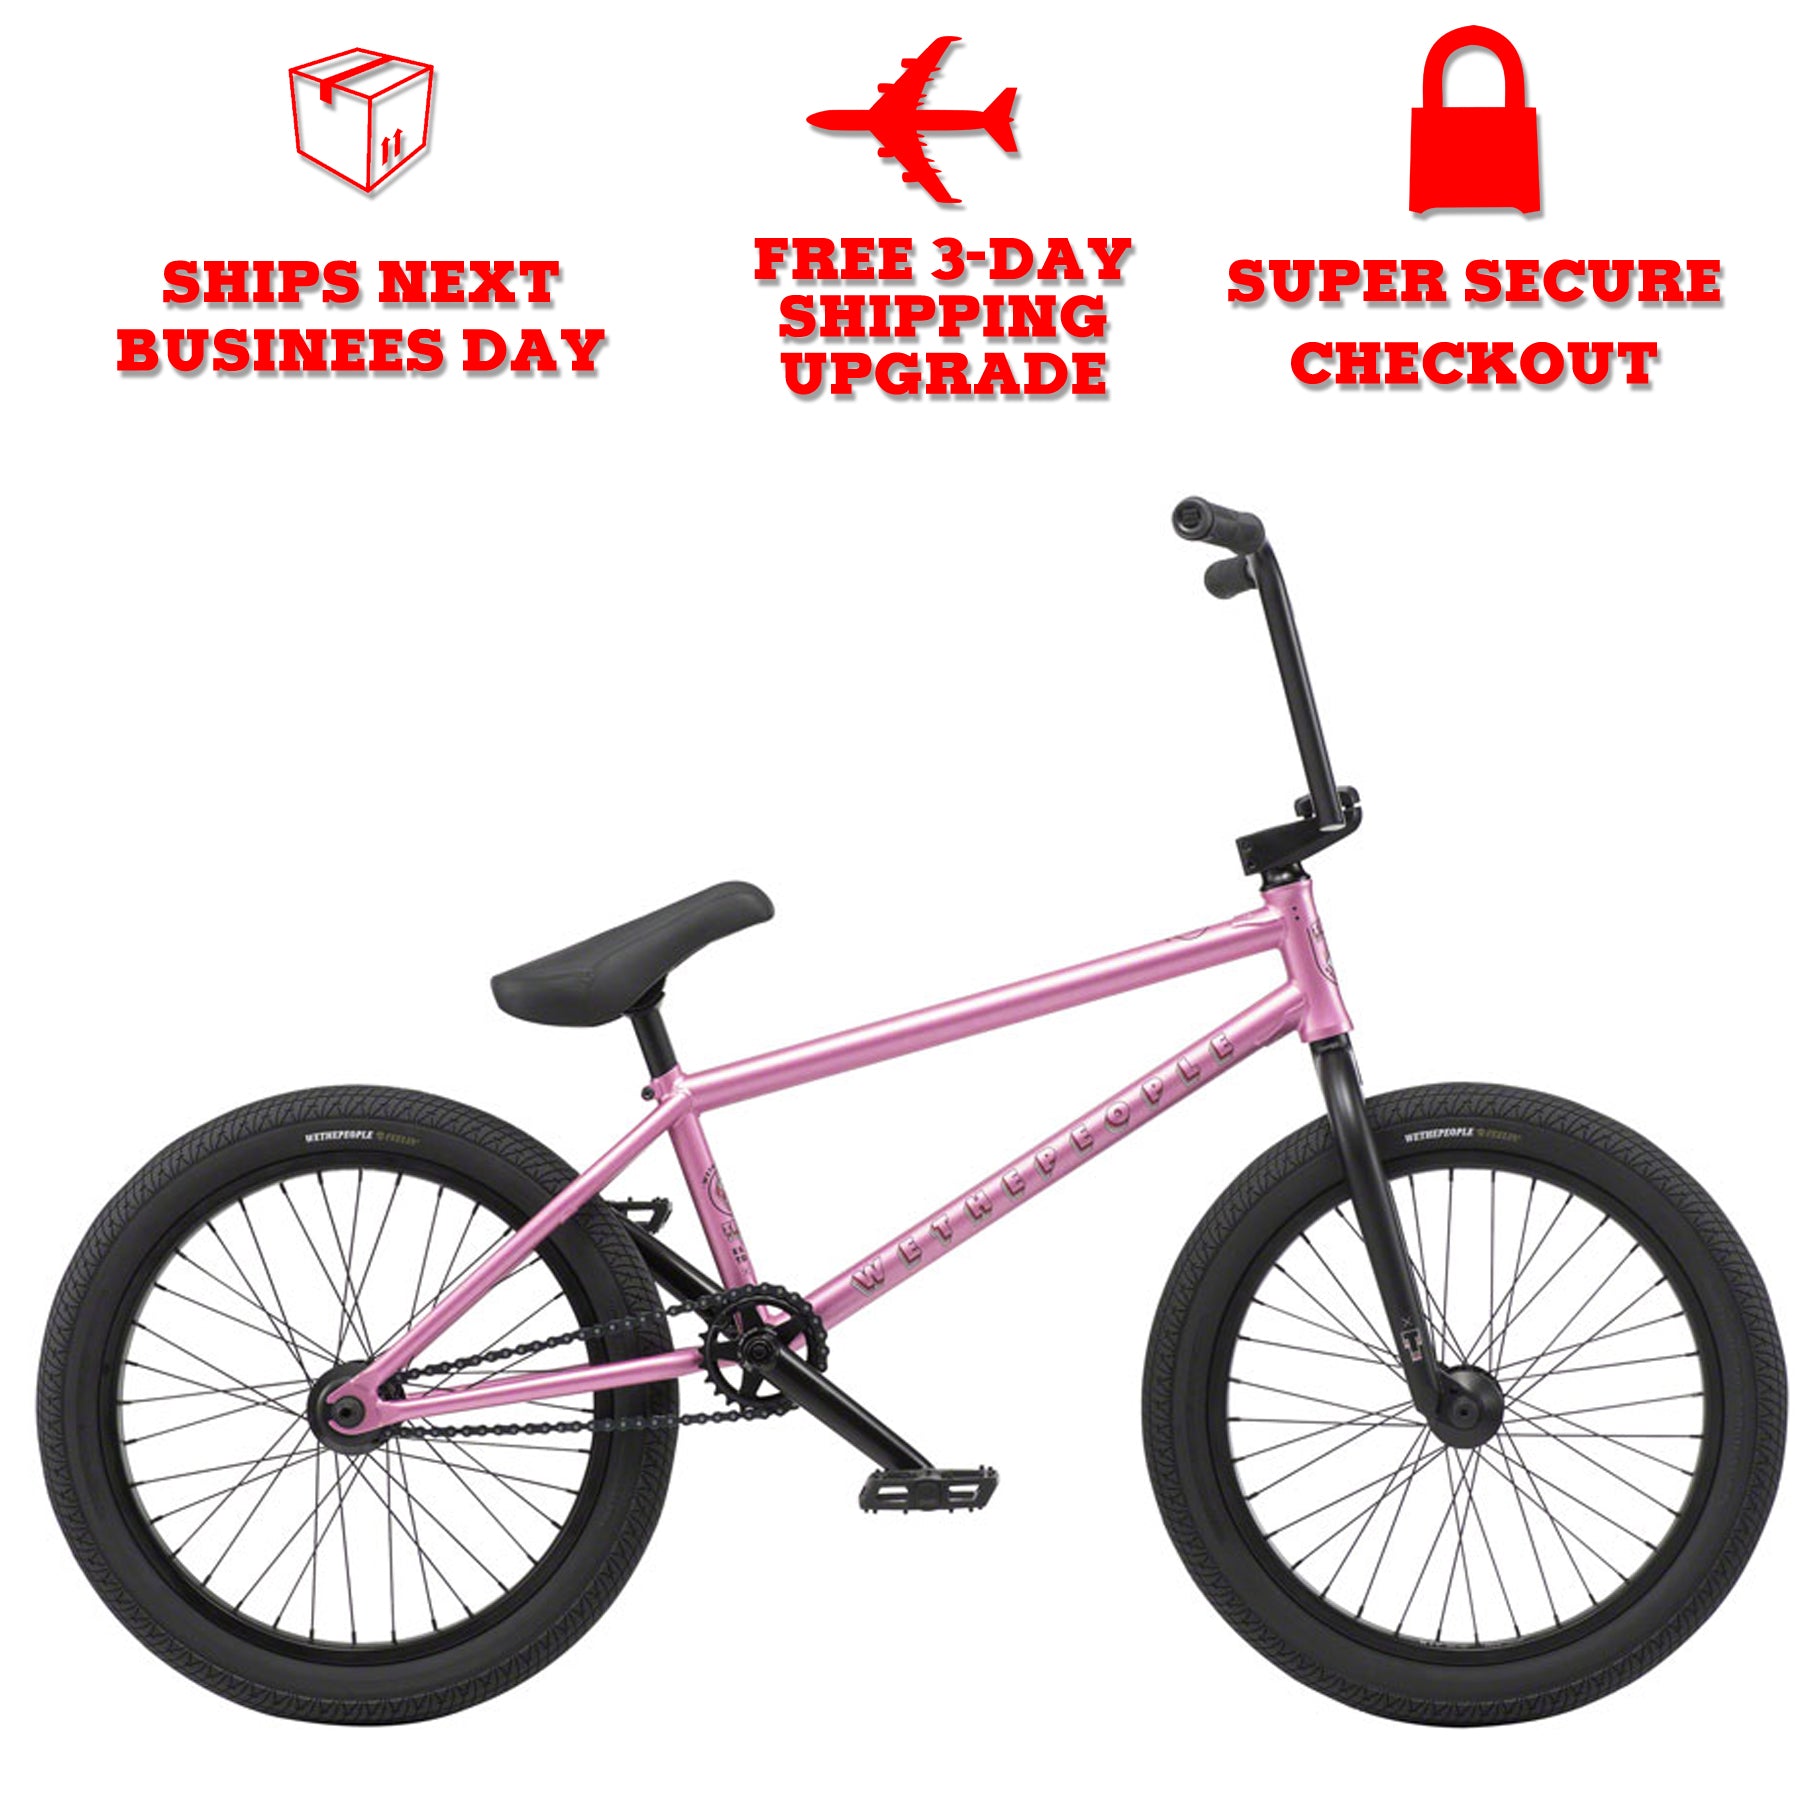 pink and black bmx bike